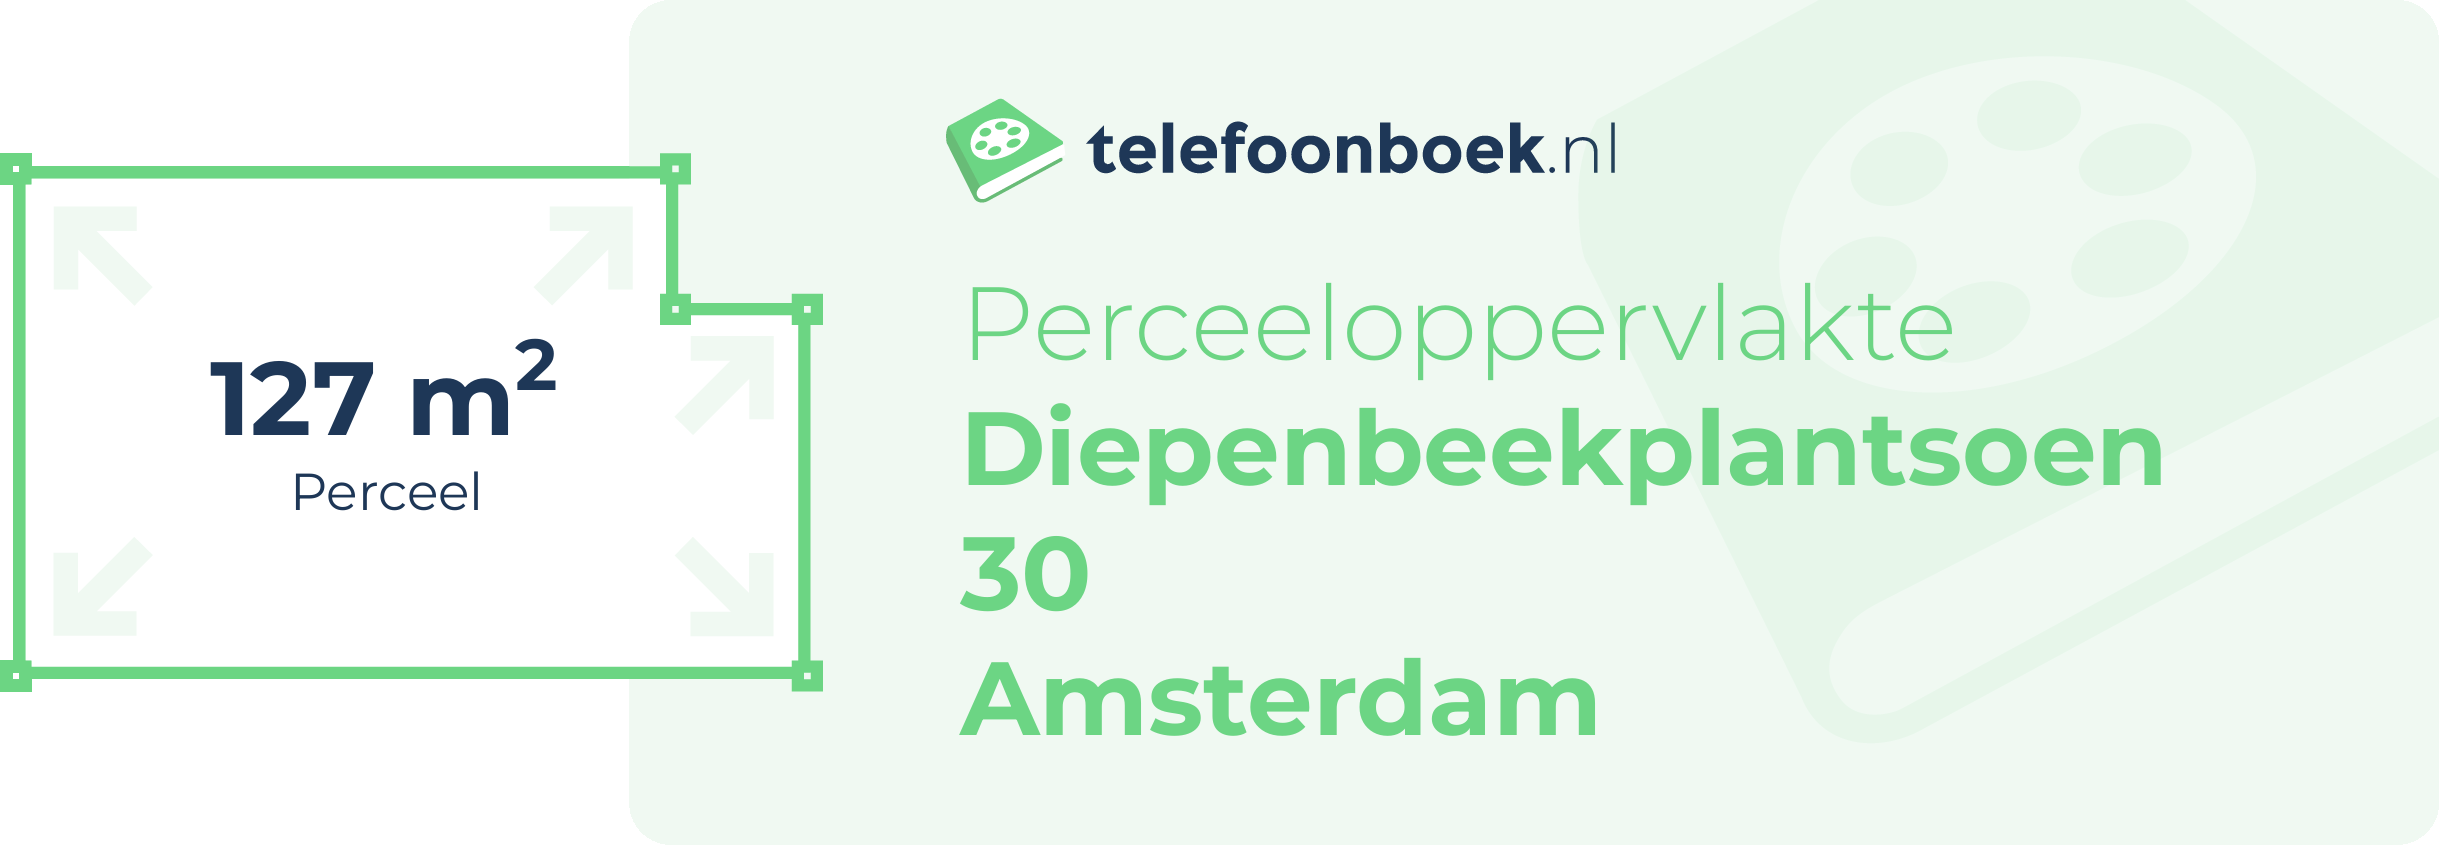 Perceeloppervlakte Diepenbeekplantsoen 30 Amsterdam